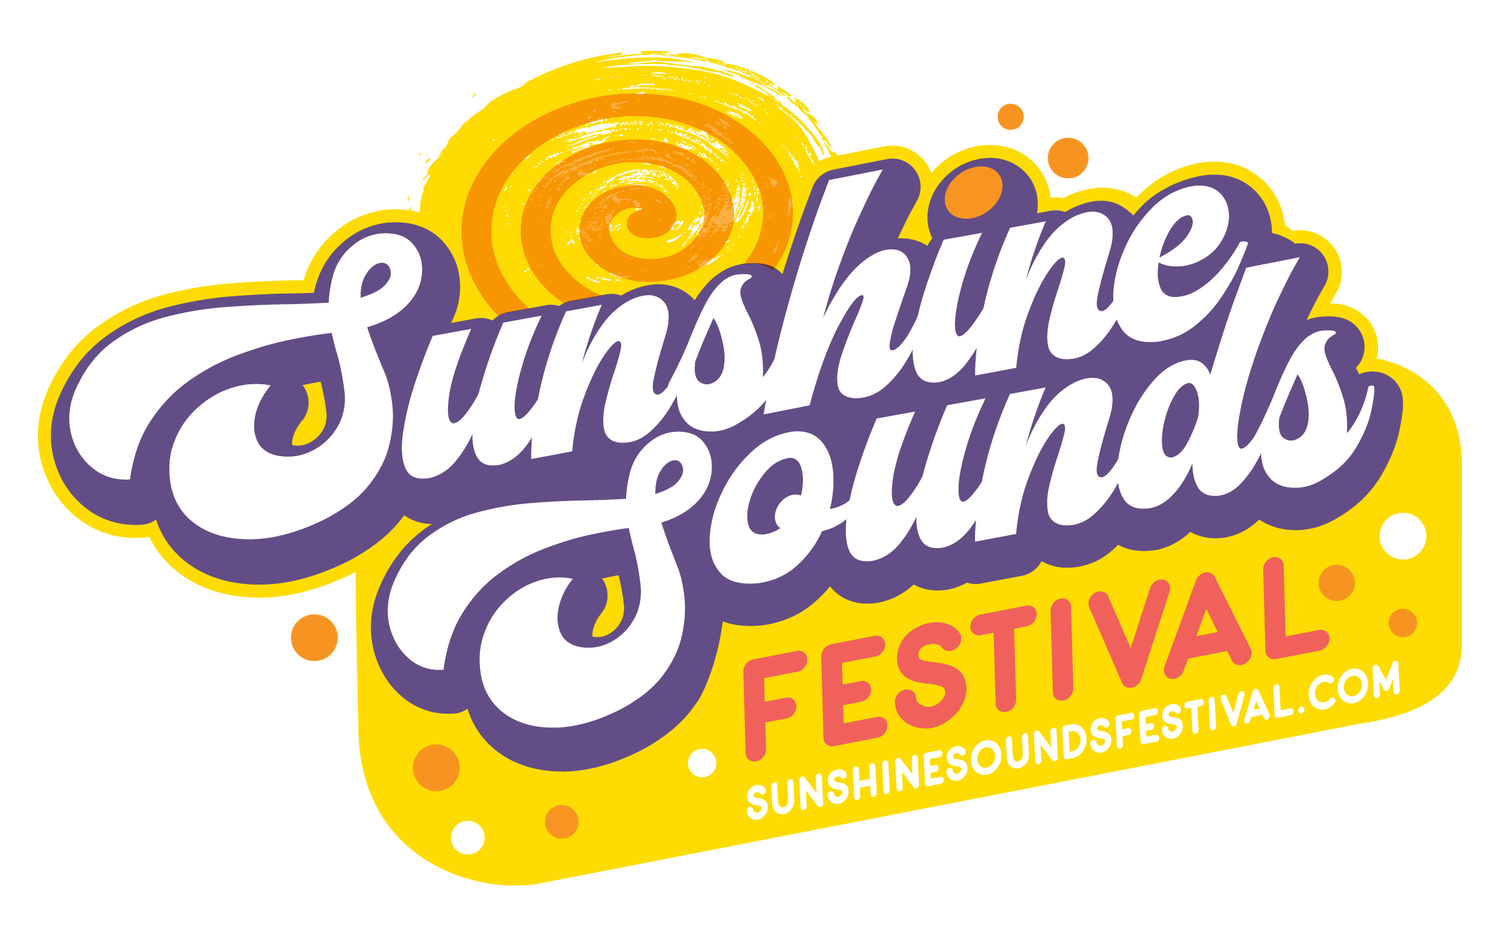 Sunshine Sounds Festival